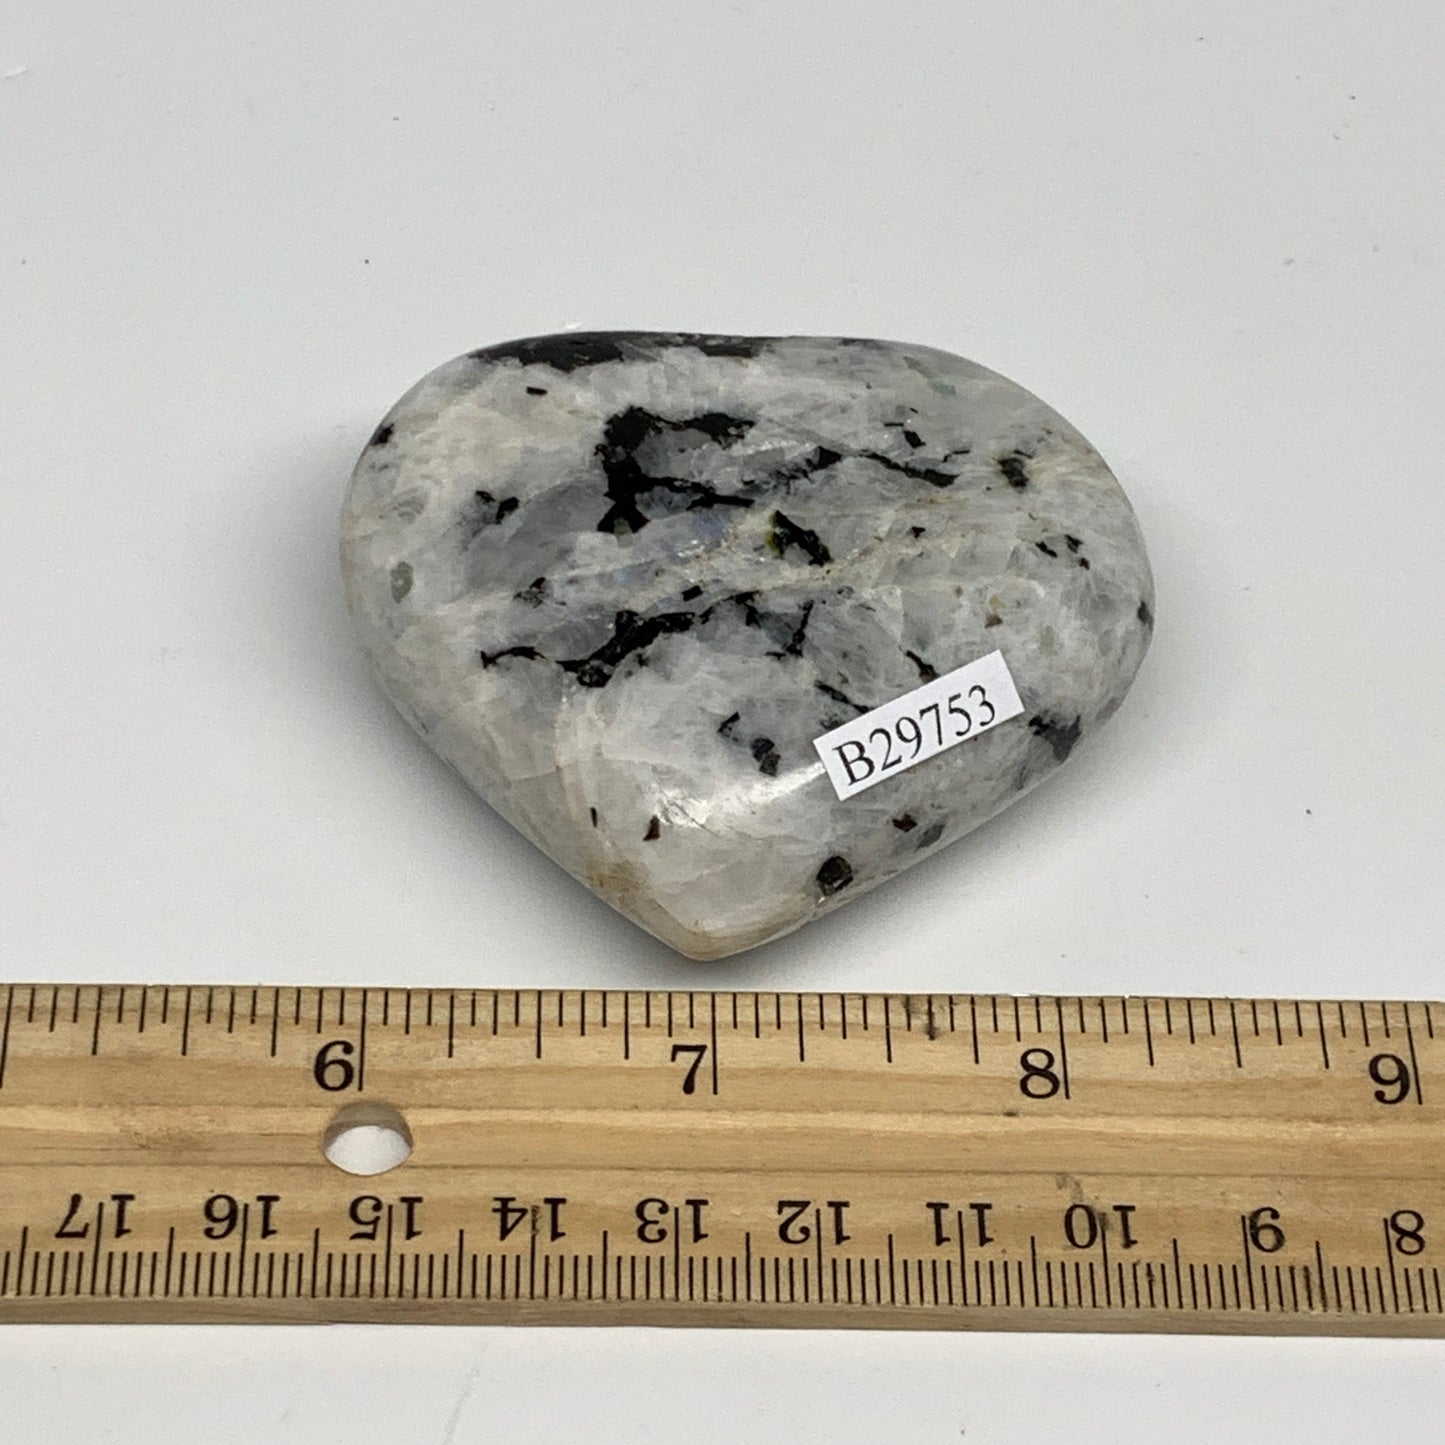 122.4g, 2.2"x2.5"x0.9", Rainbow Moonstone Heart Crystal Gemstone @India, B29753